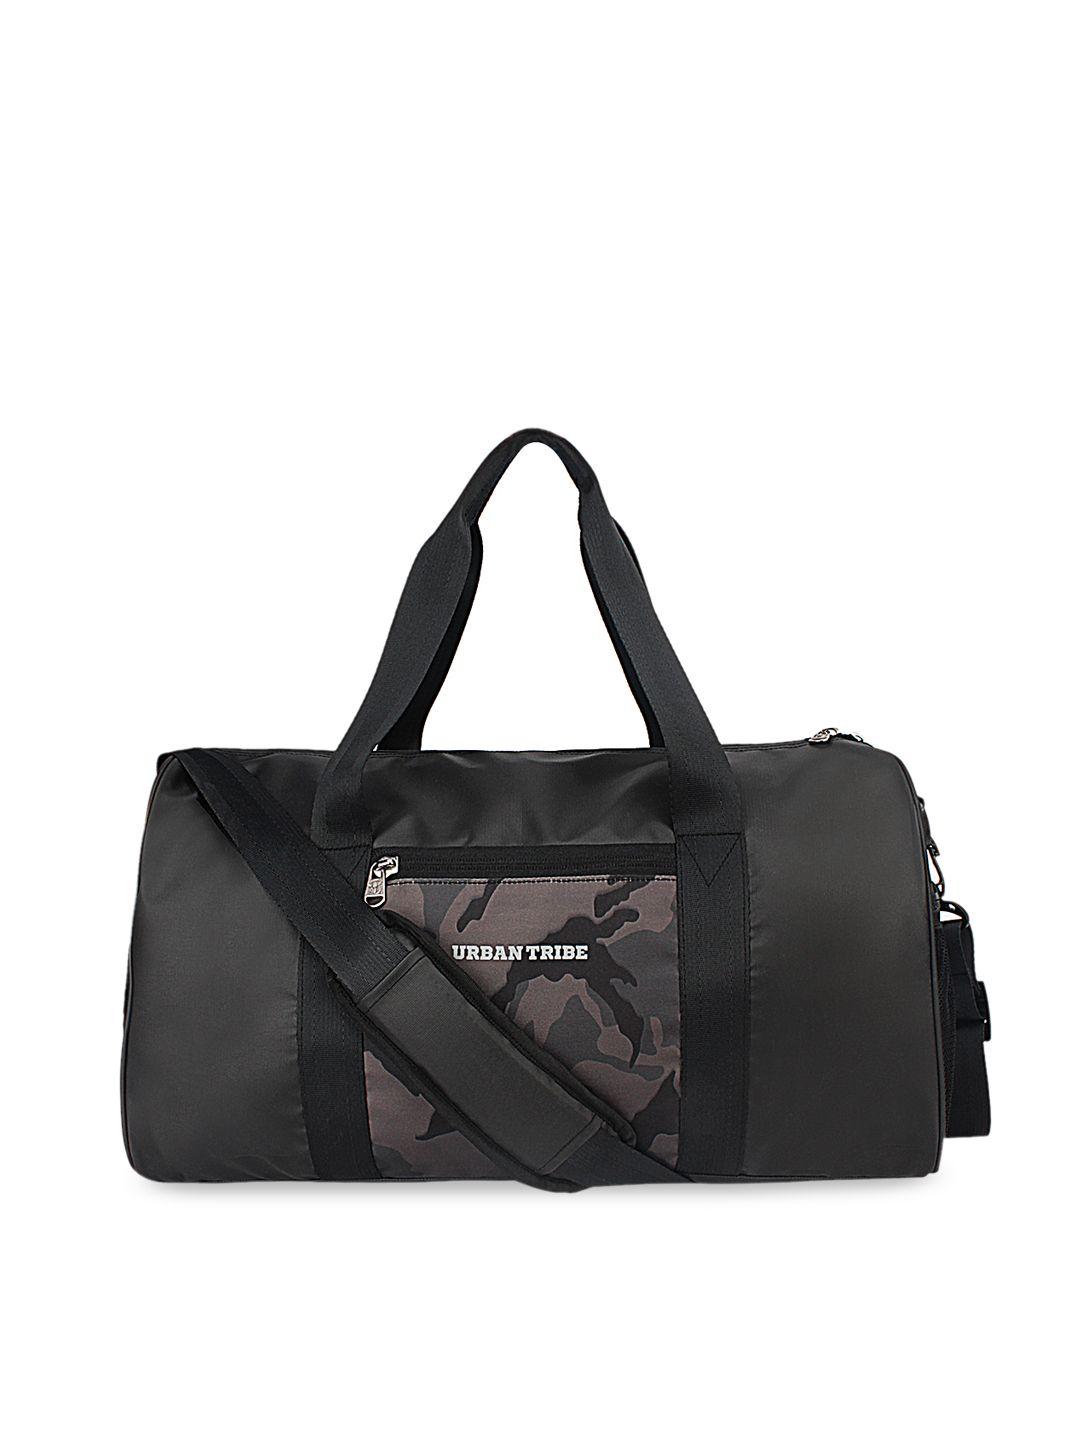 urban tribe unisex black printed duffel bag